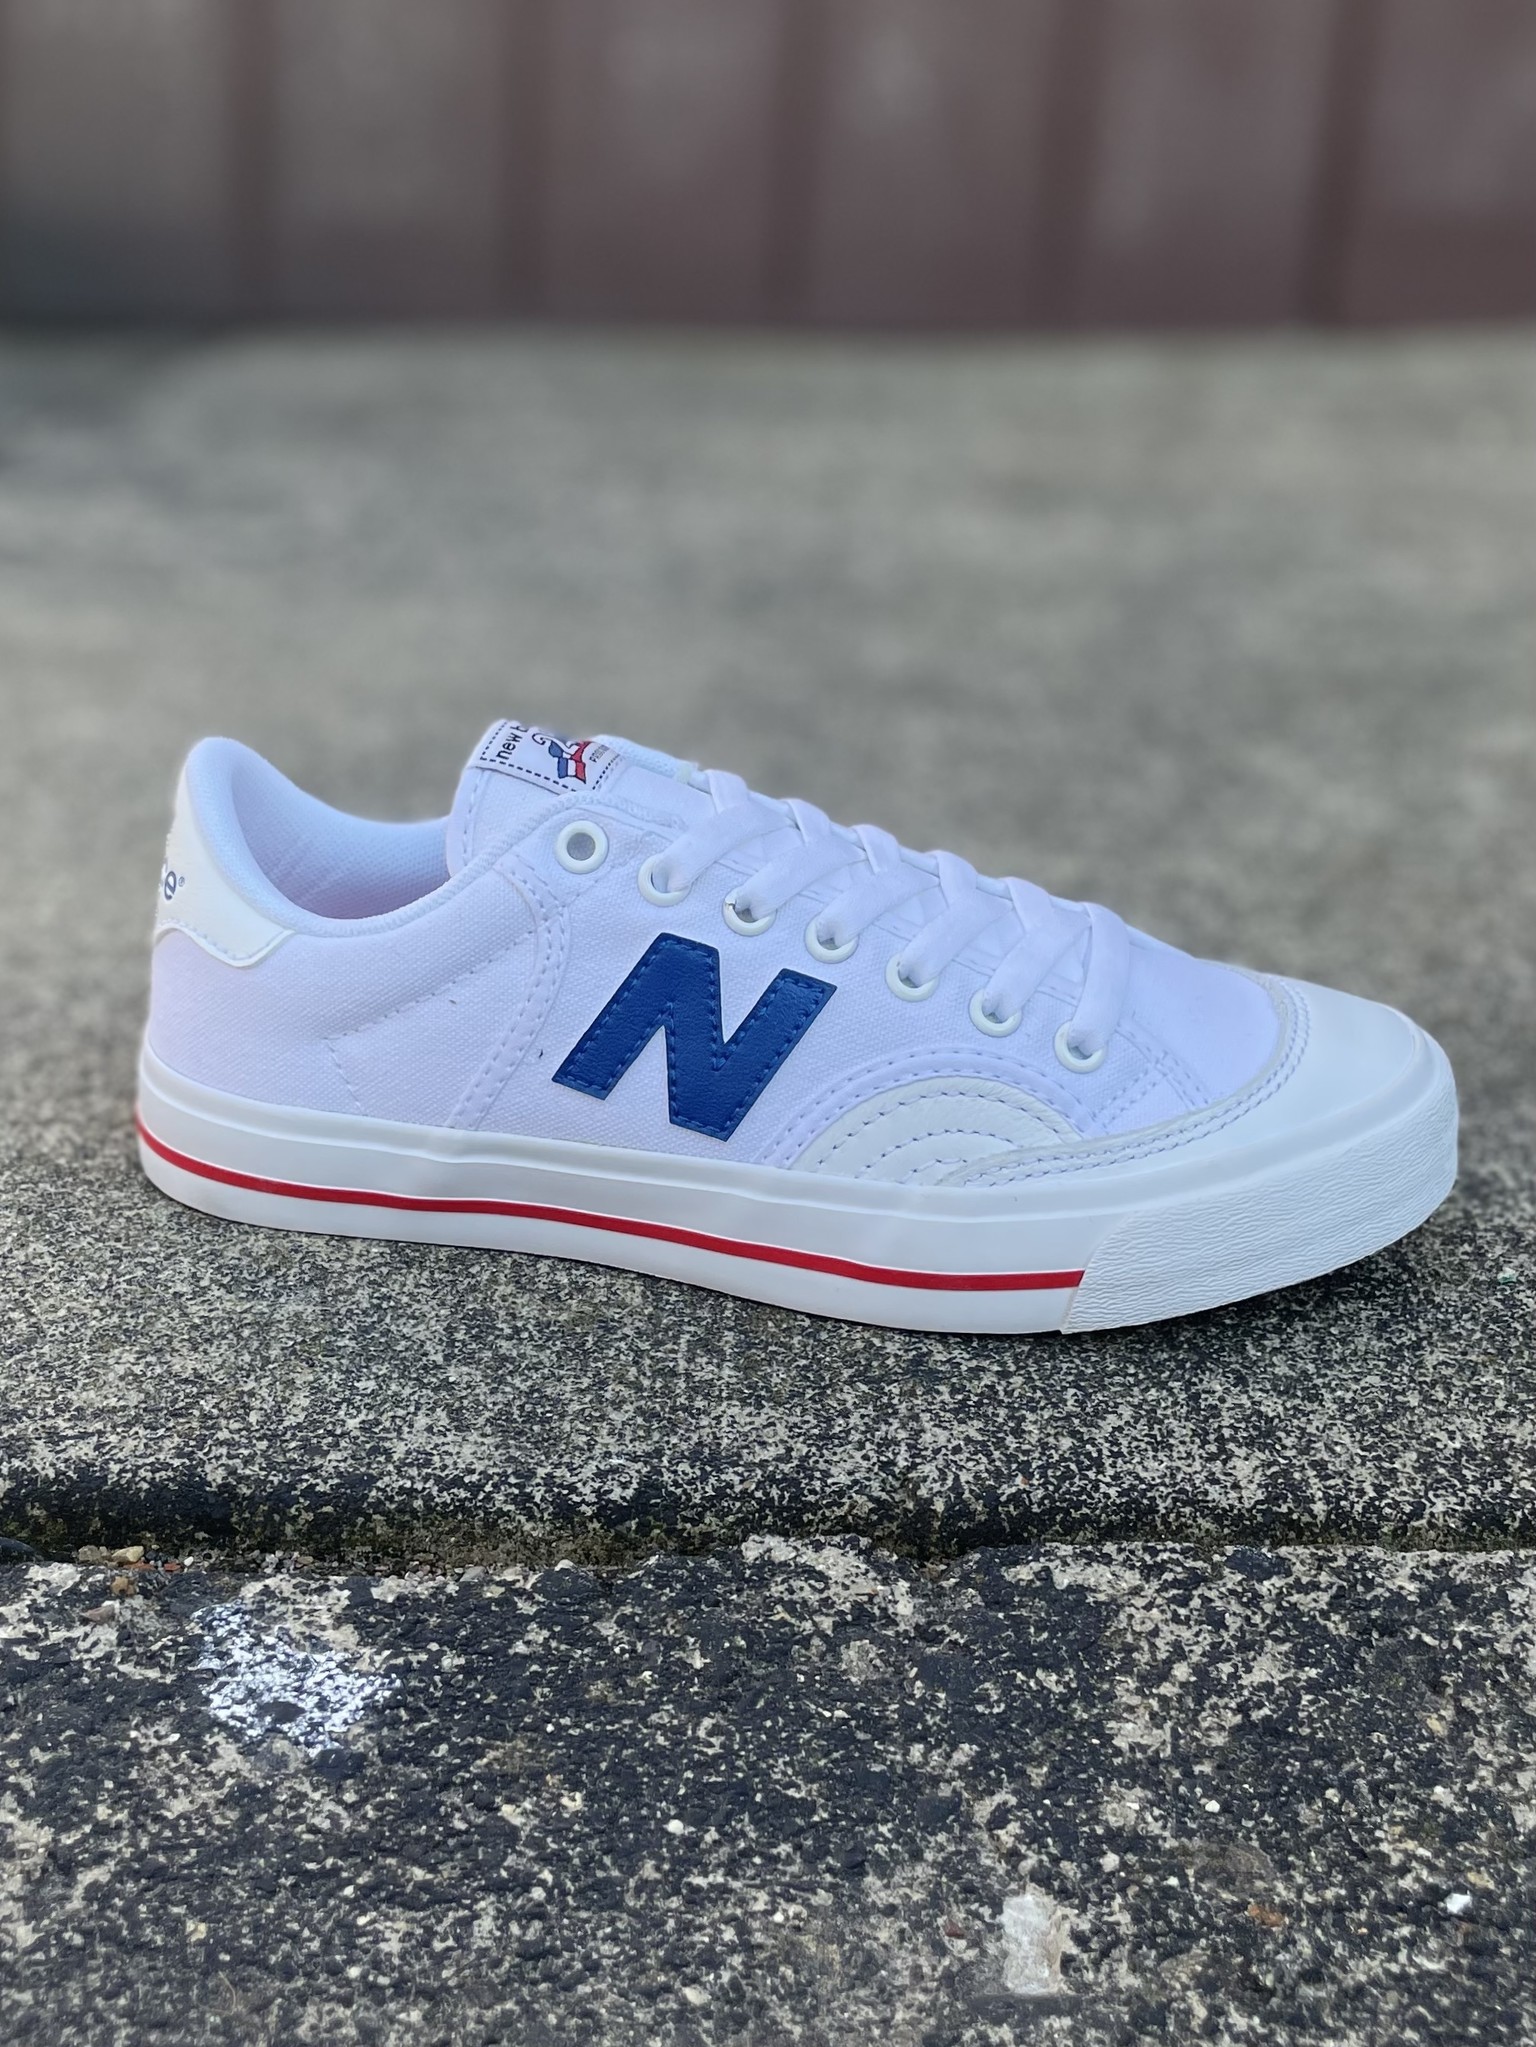 NB Numeric 212 - White/Blue